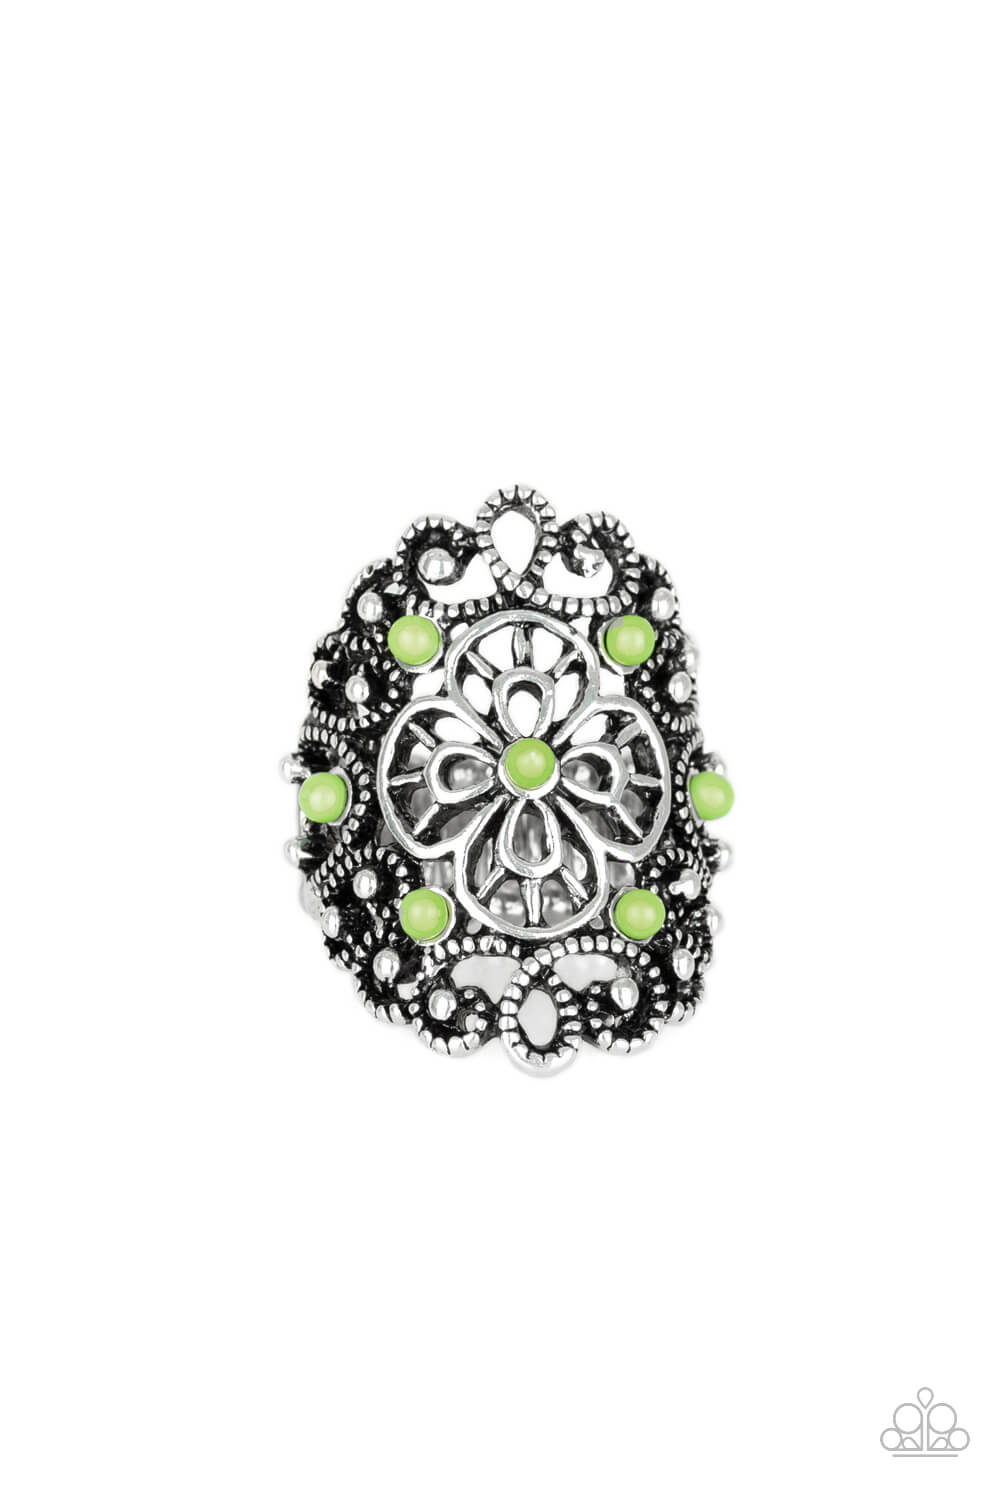 Floral Fancies - Green Bead Ring - Princess Glam Shop